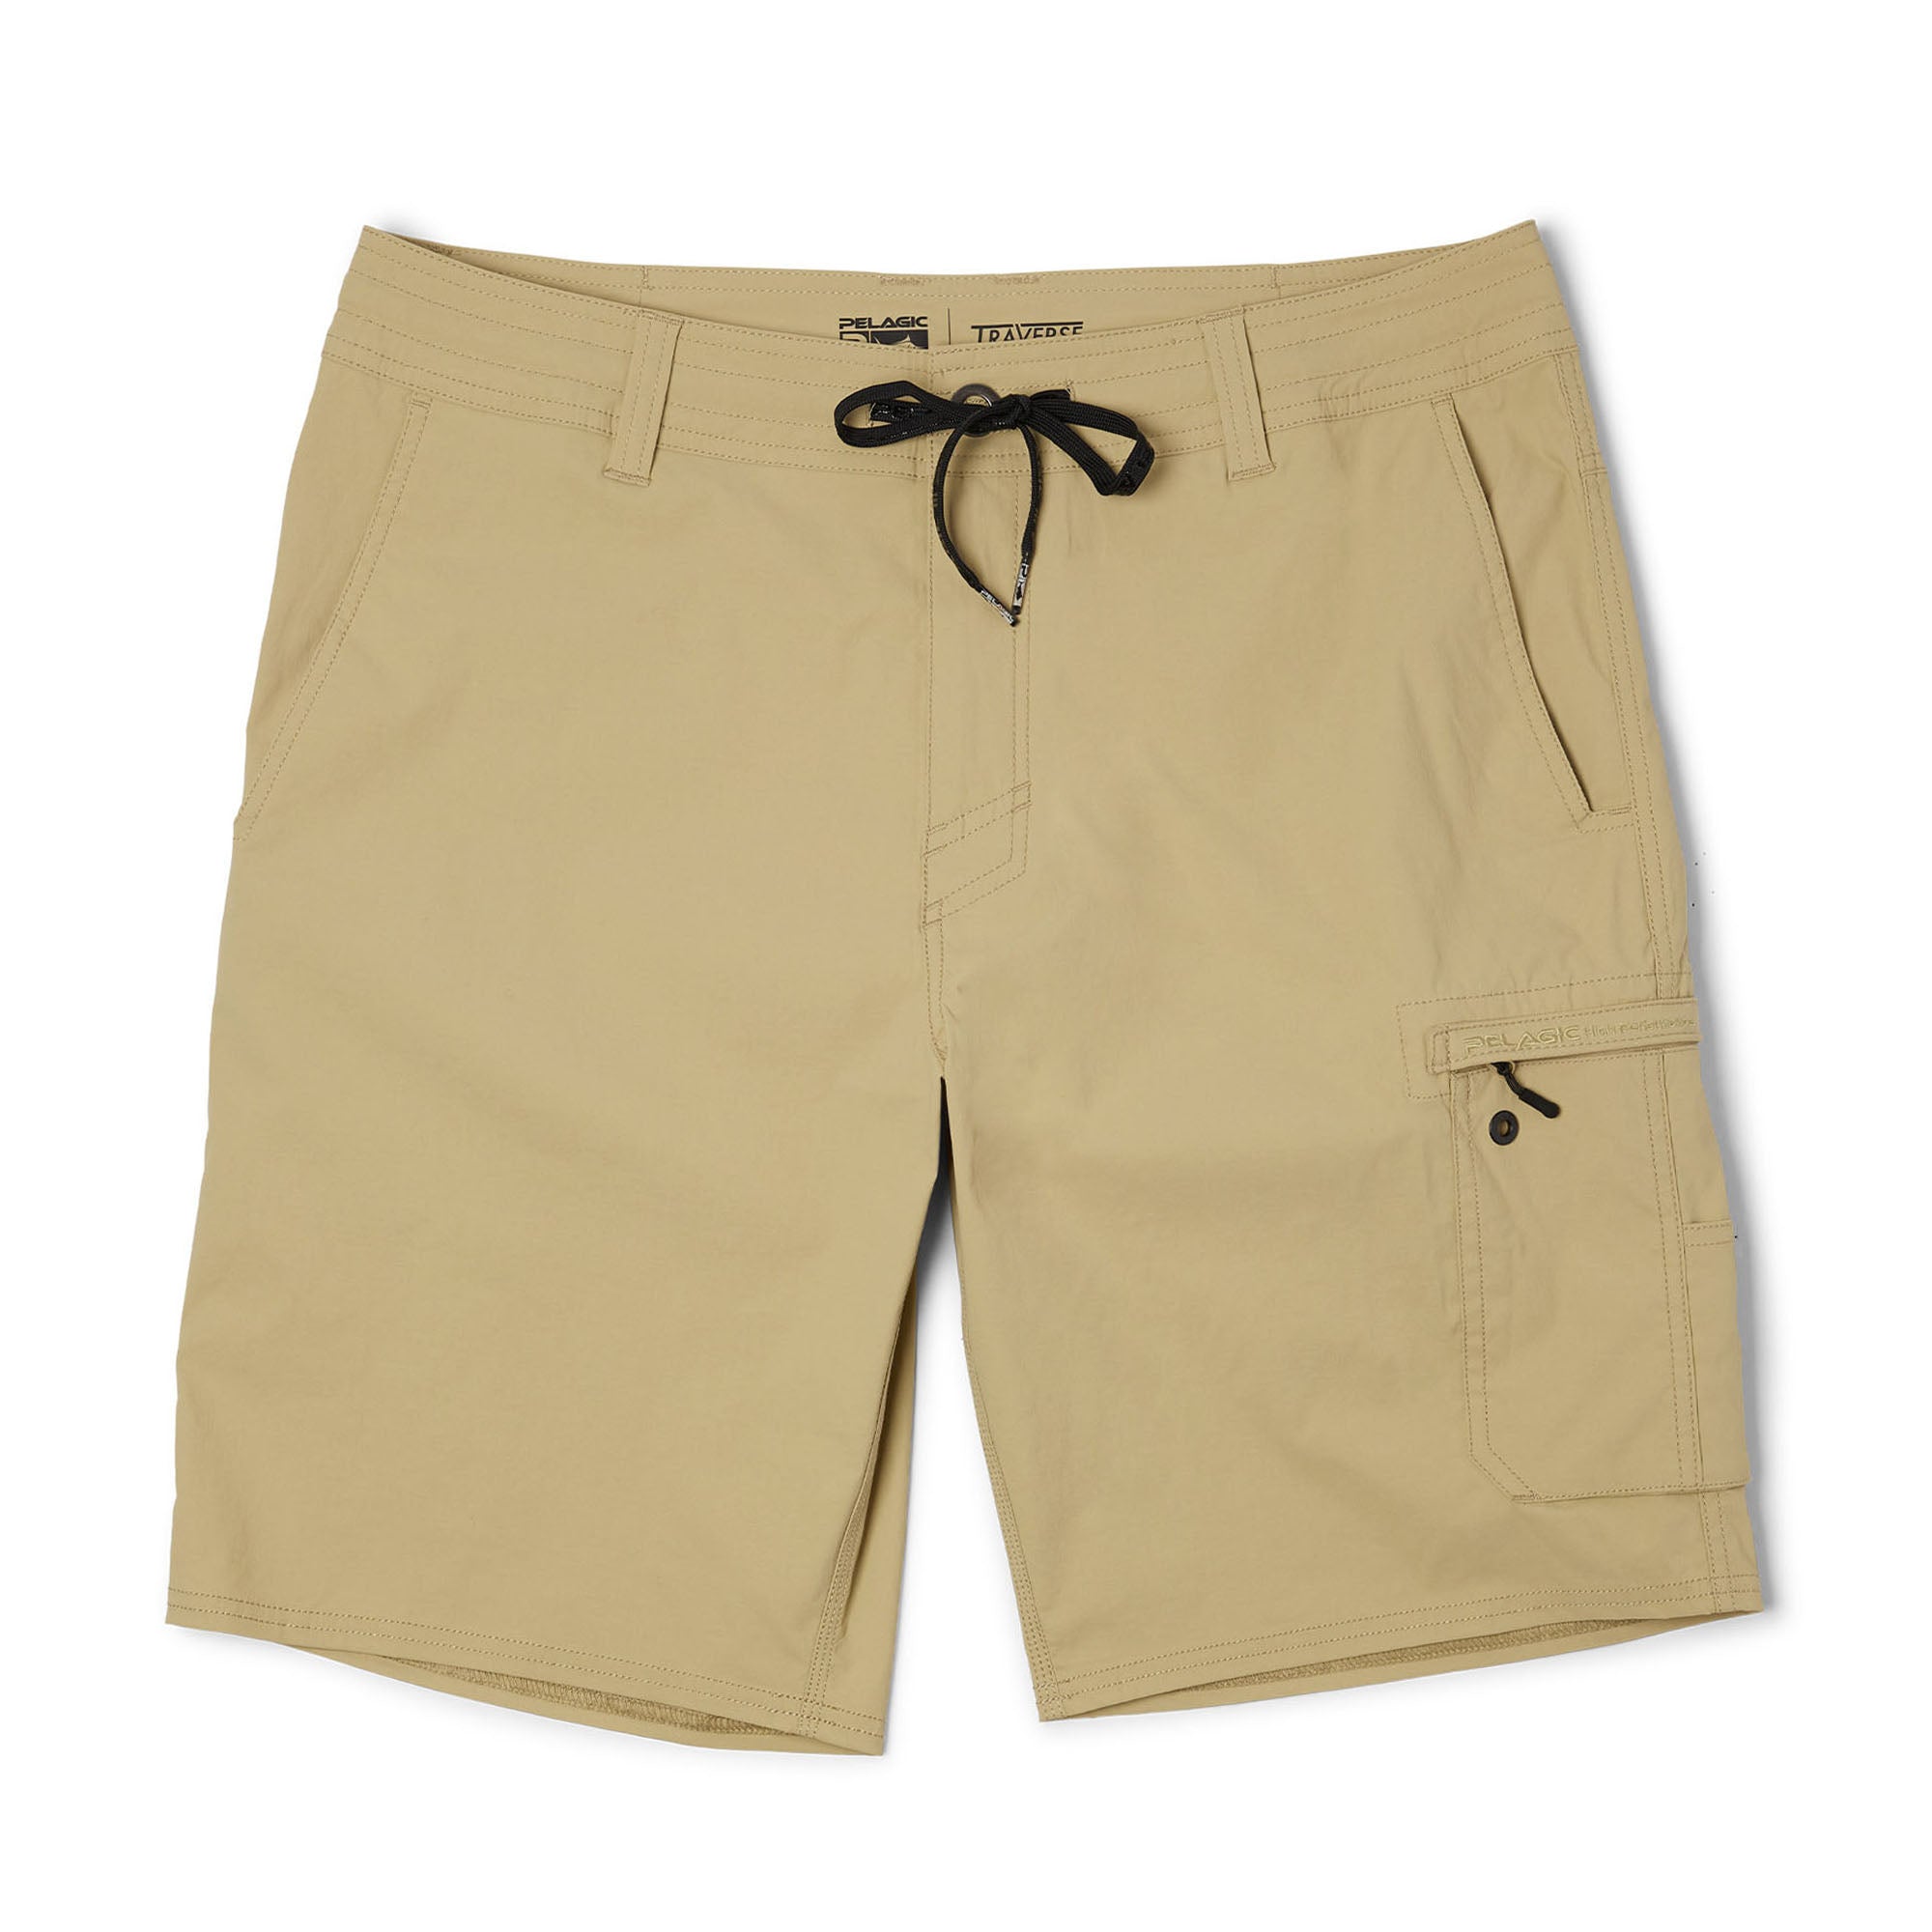 Pelagic Traverse Hybrid Fishing Shorts - Khaki - 40